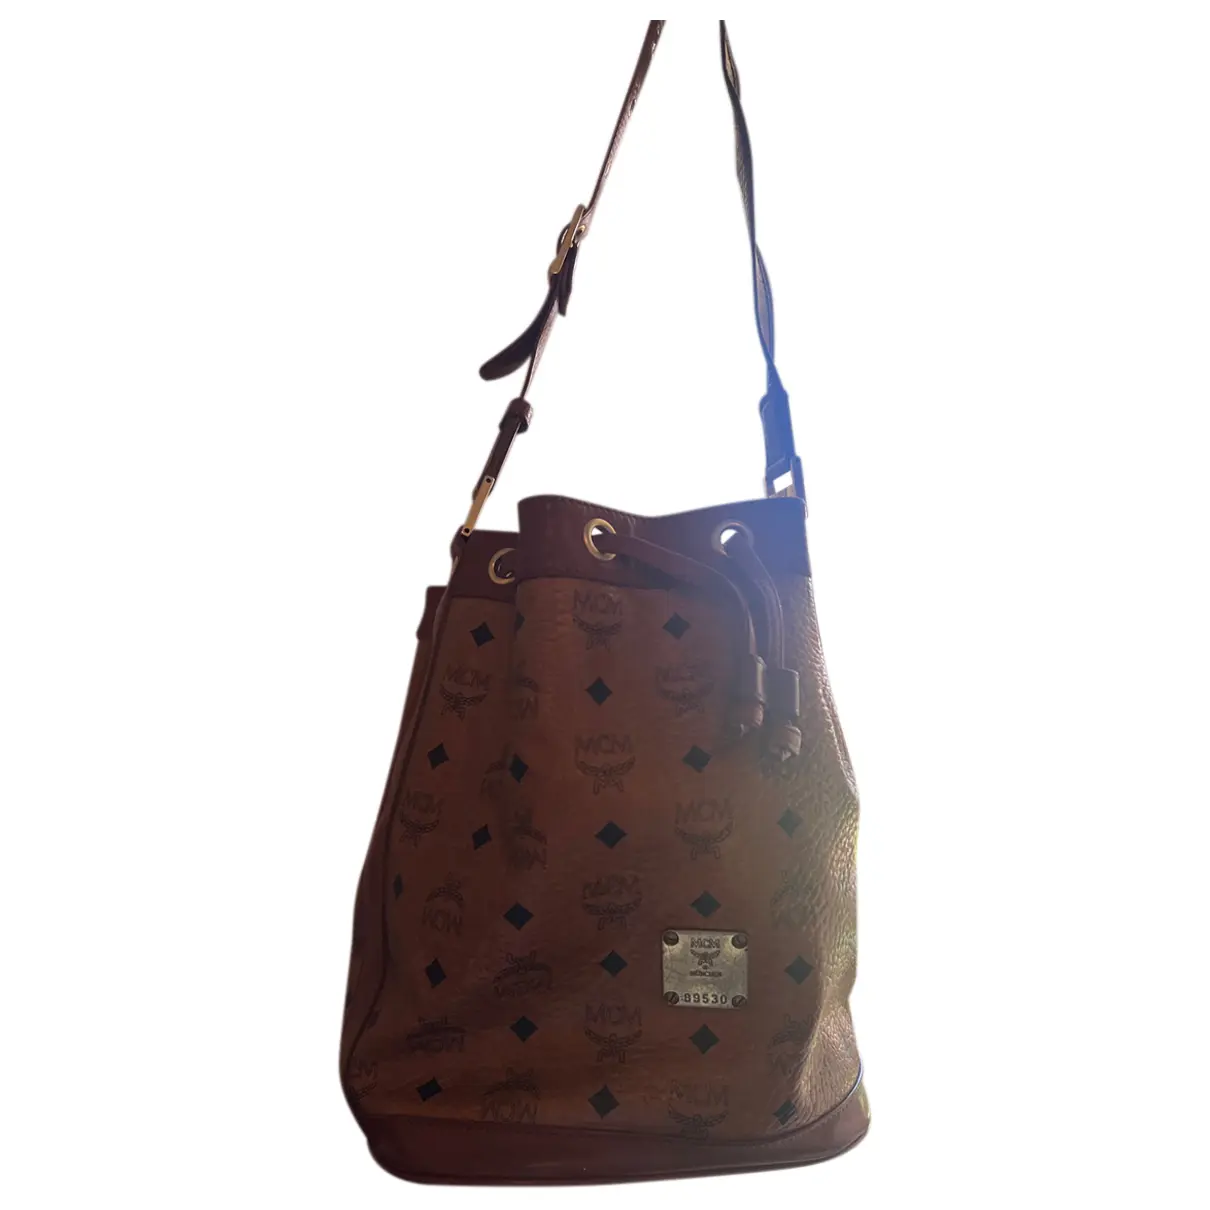 Heritage Drawstring leather handbag